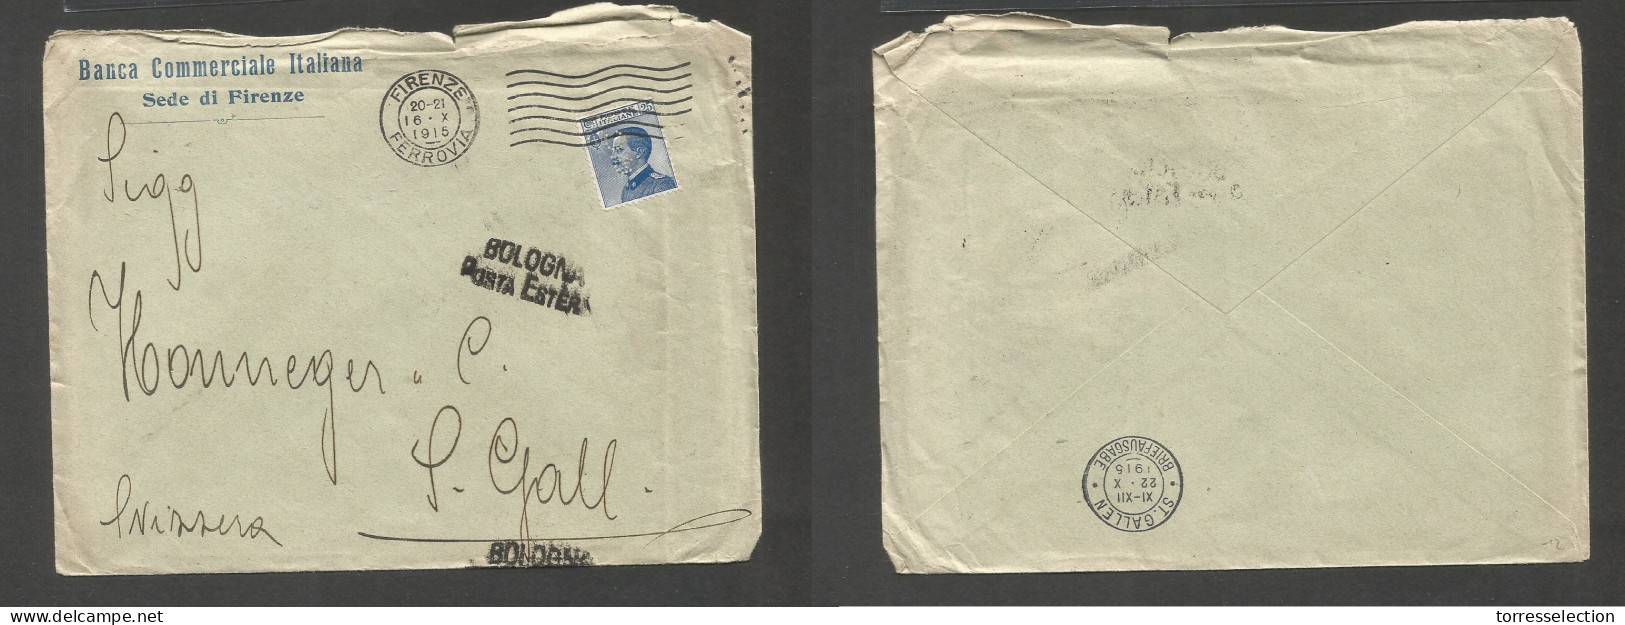 Italy - XX. 1915 (16 Oct) Perfin. BCI. Firenze - Switzerland, St. Gallen (22 Oct) Single Fkd Envelope. SALE. - Non Classés